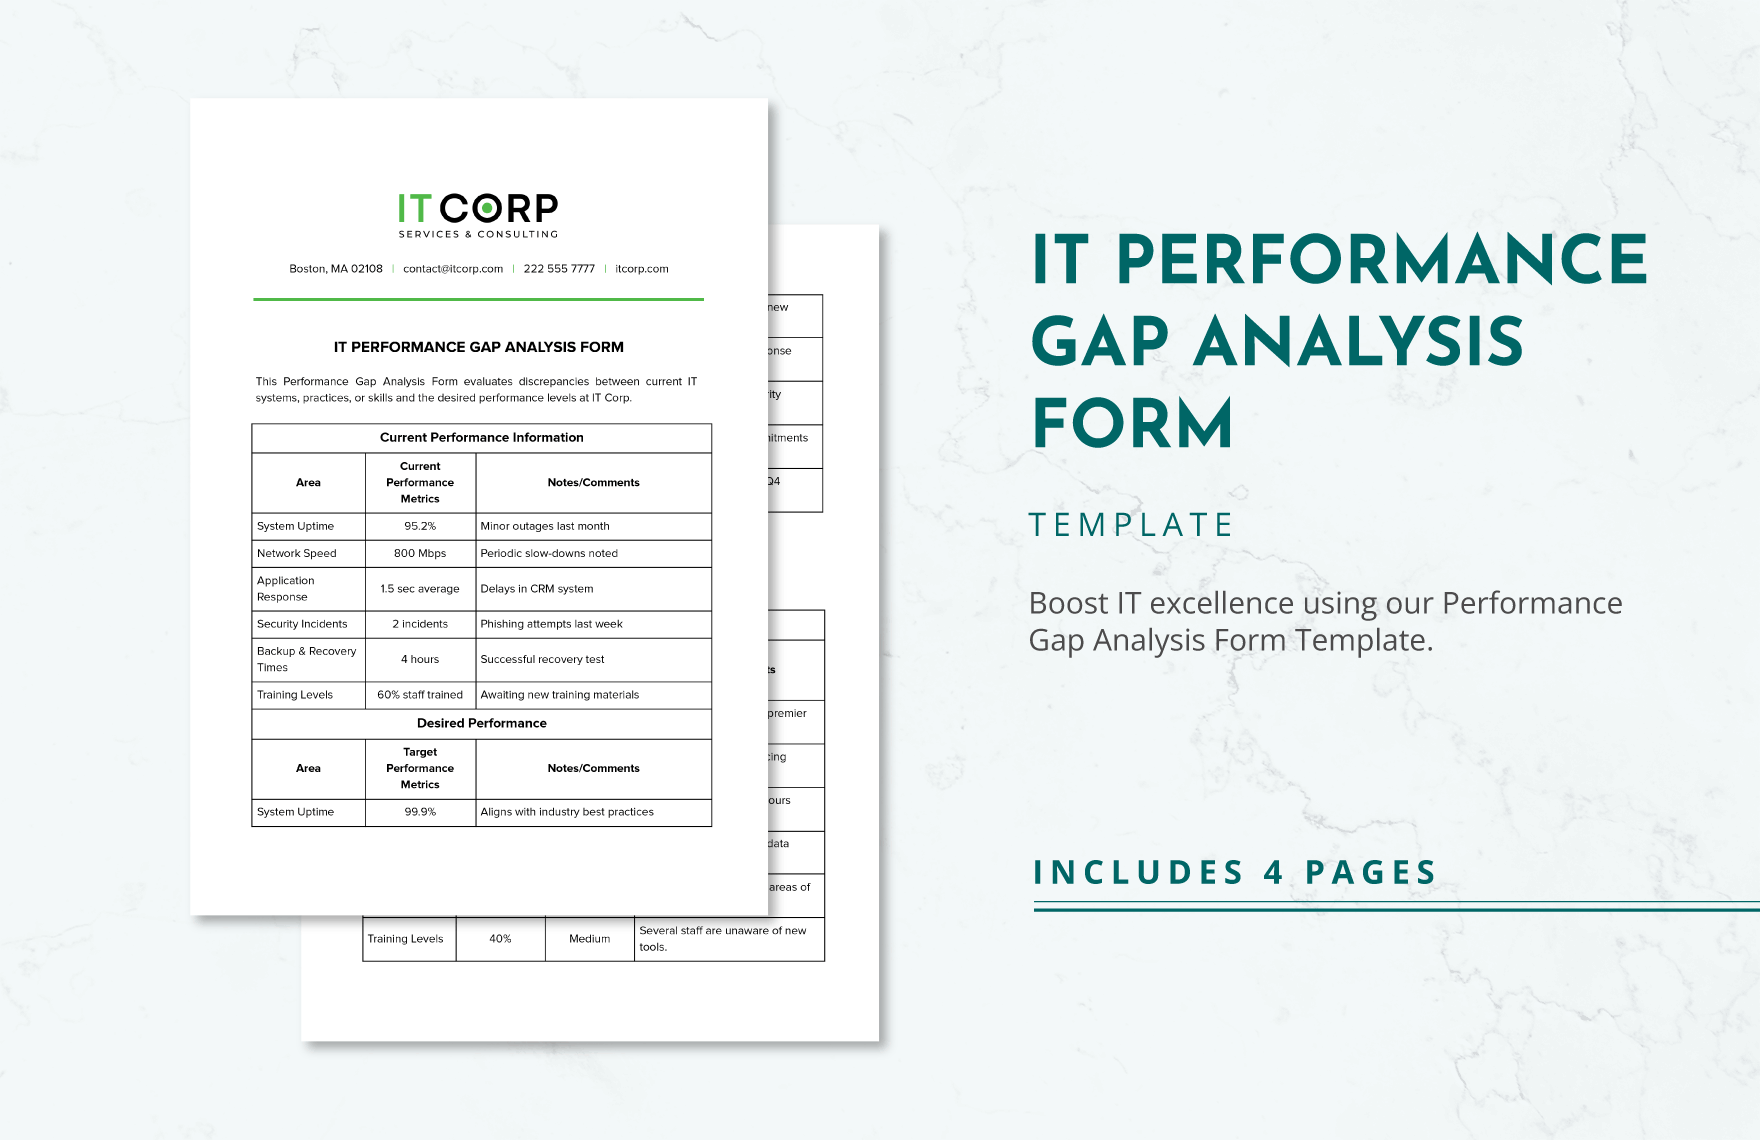 IT Performance Gap Analysis Form Template